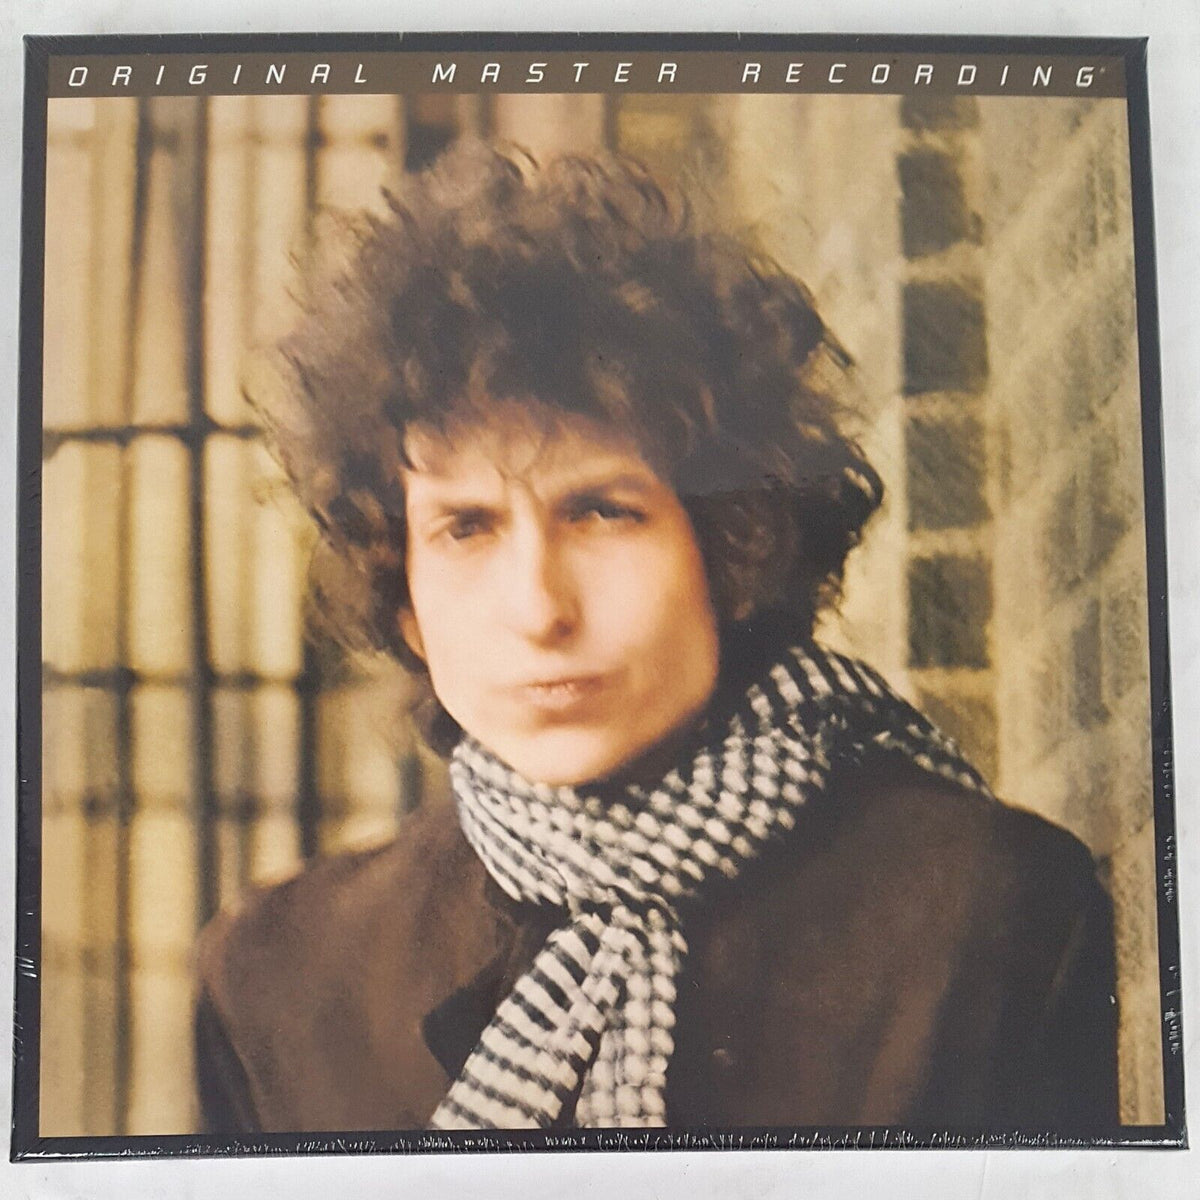 Bob Dylan – Blonde On Blonde – 180g 3xLP 45RPM Original Master Recording (MoFi)